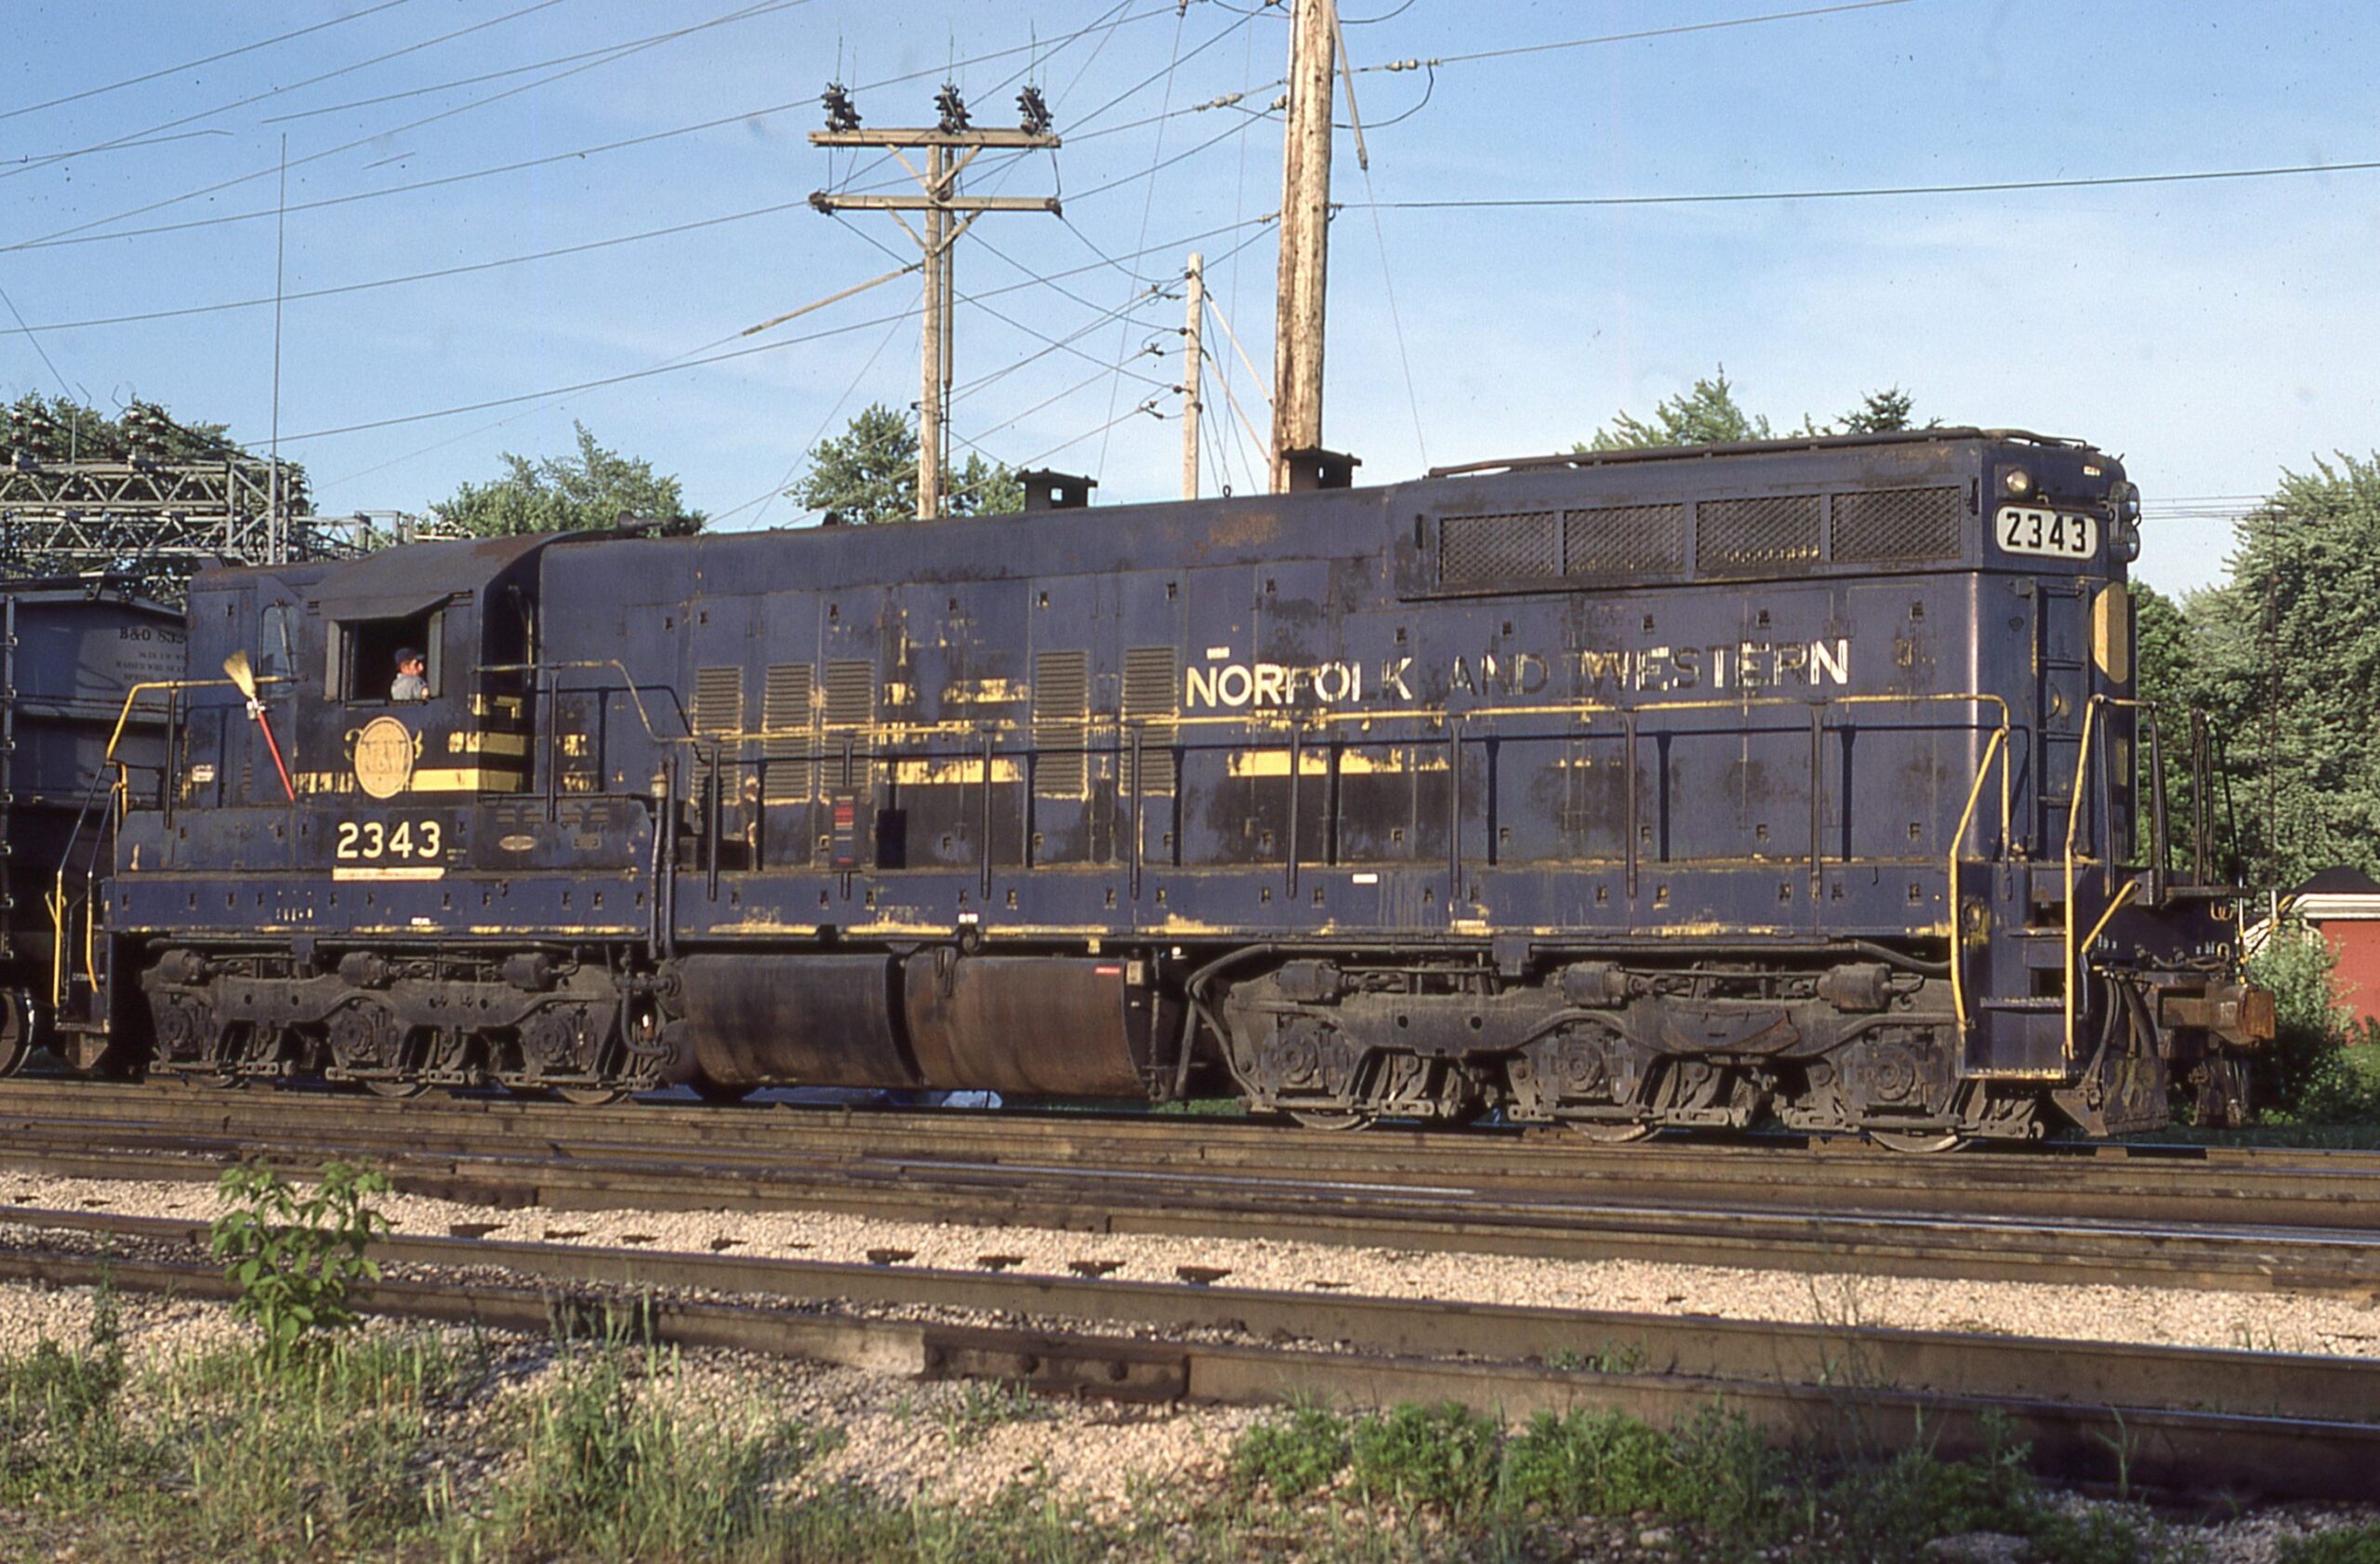 Norfolk and Western Railway | Bellevue, Ohio | EMD Class SD9 #2343 | ex Nickel Plate SD9 #343 | June 13, 1977 | Emery Gulash photograph